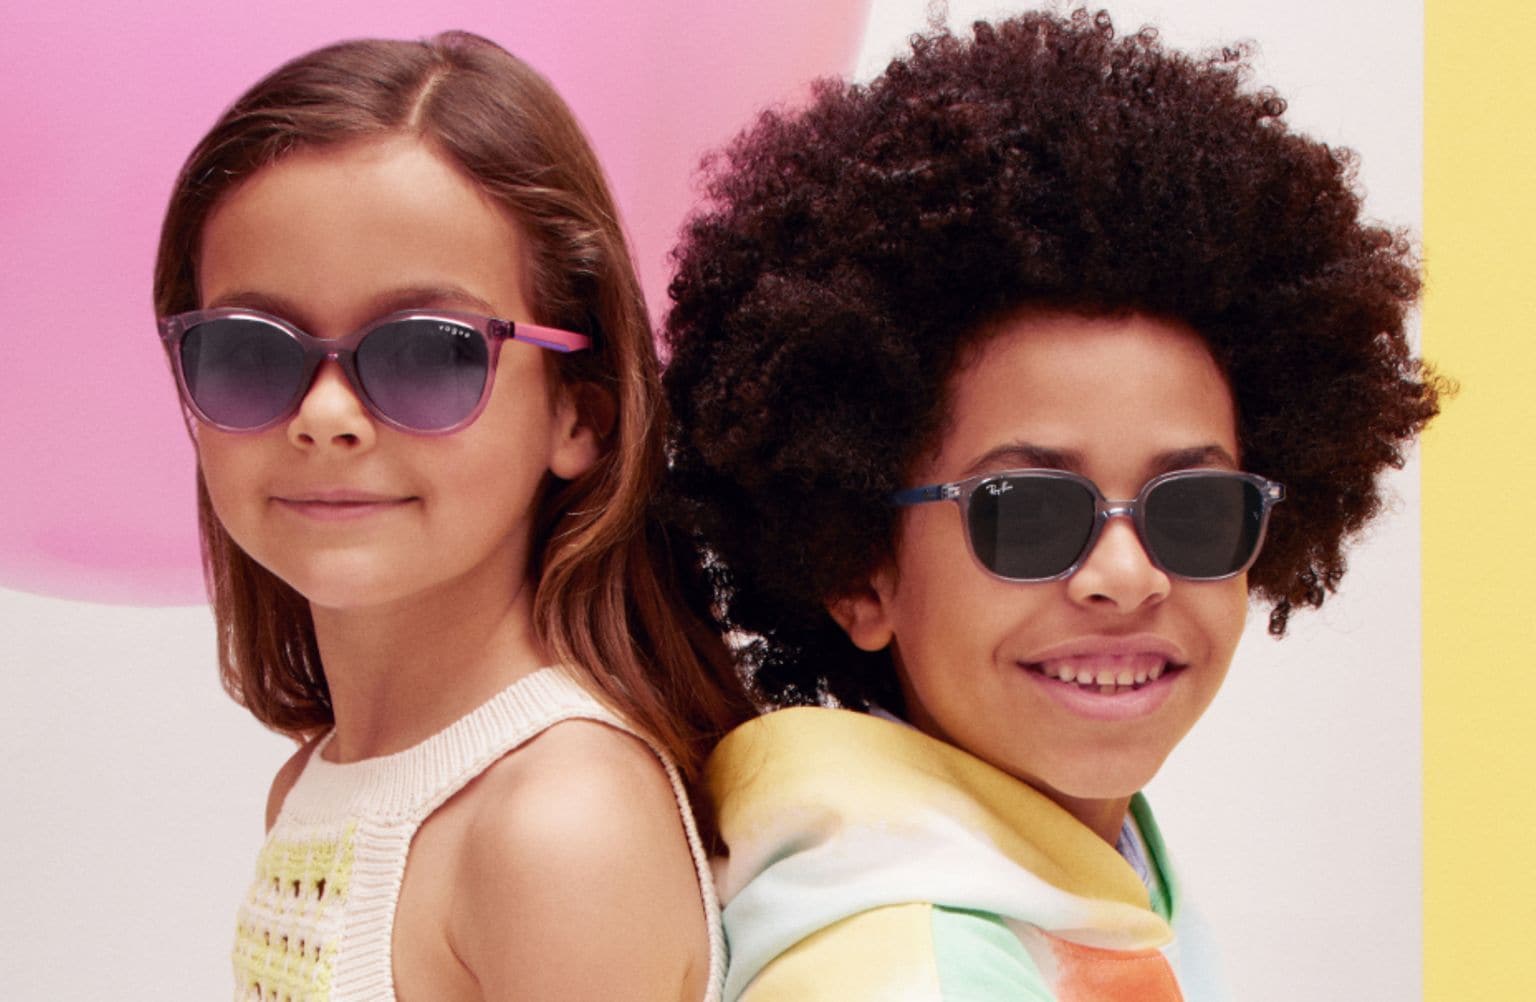 Sunglass Hut Topanga Plaza  Sunglasses for Men, Women & Kids